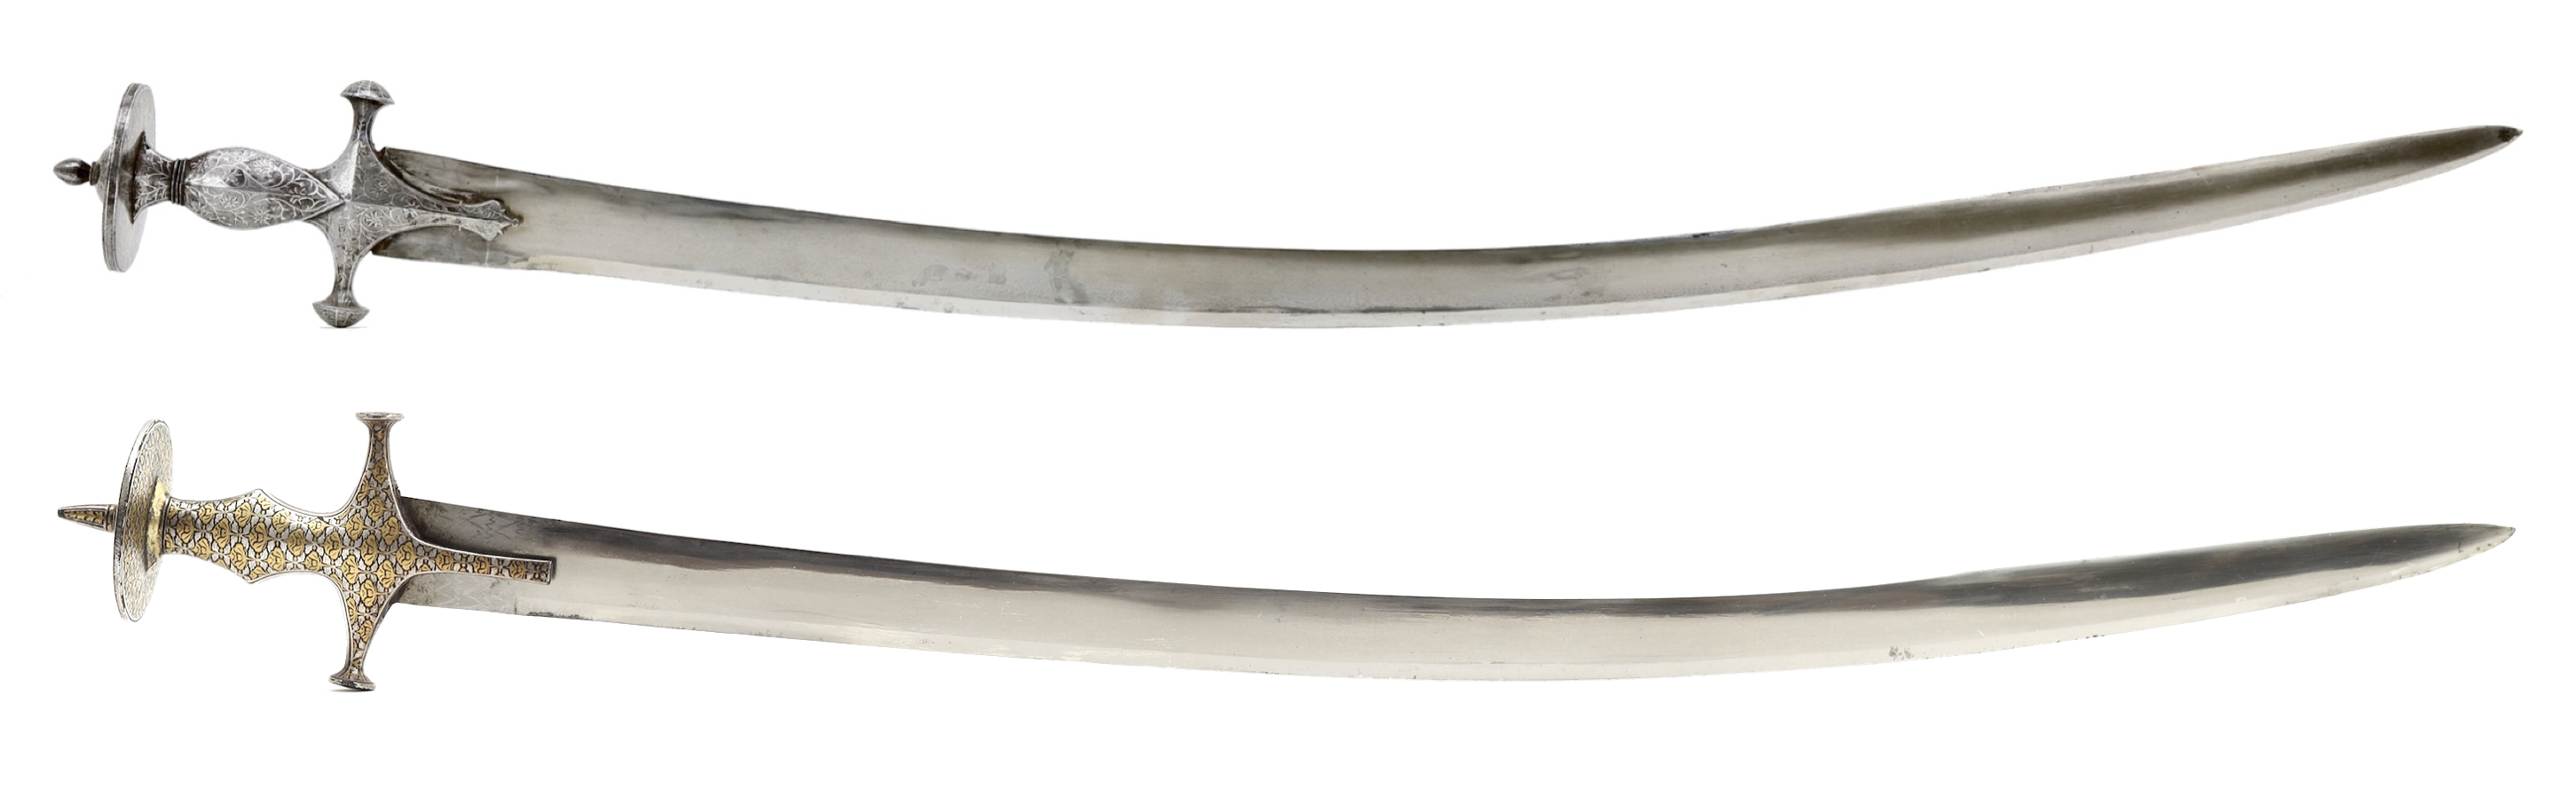 Two sirohi swords